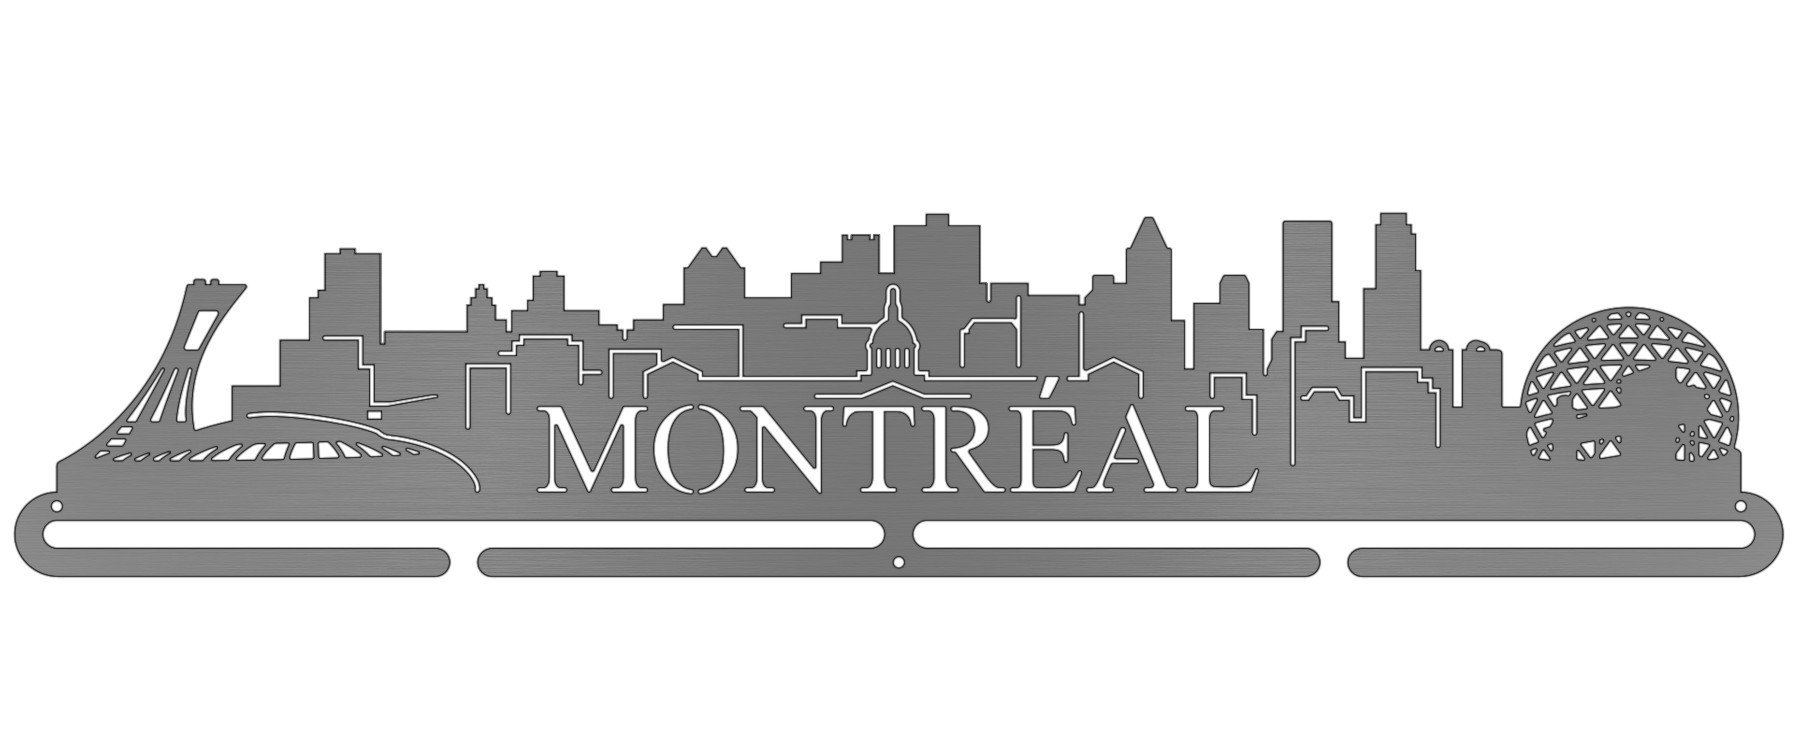 Montreal Cityscape